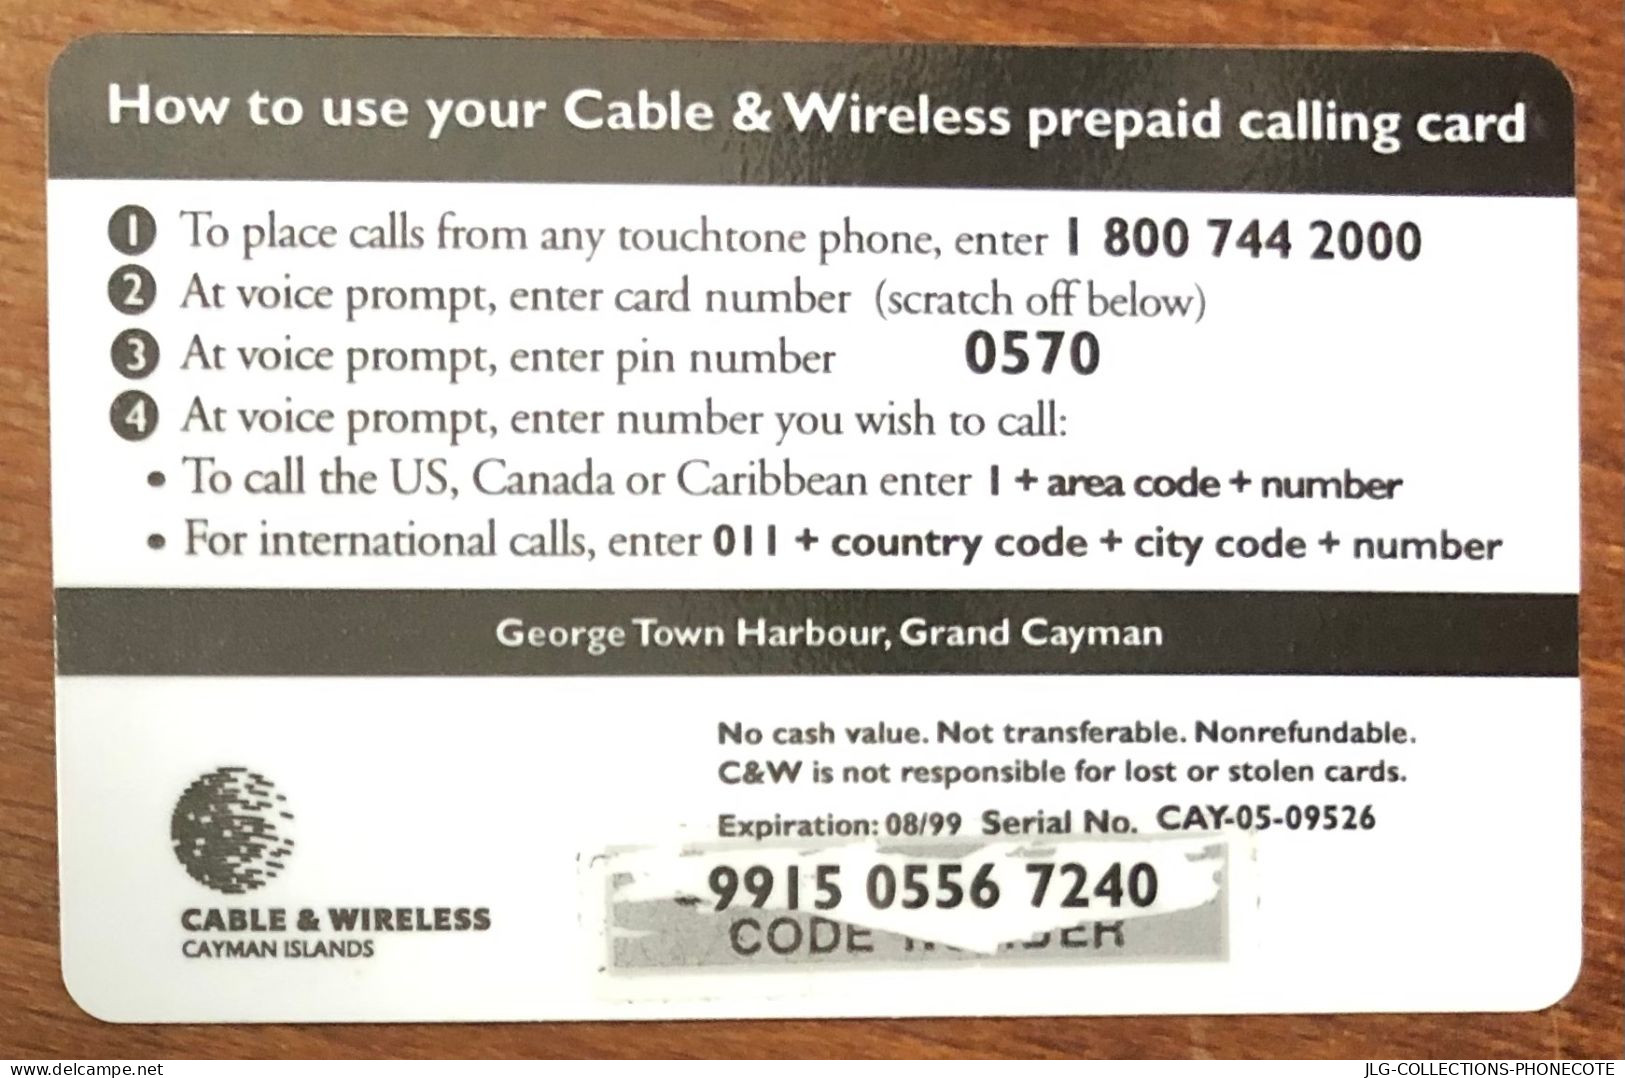 CAYMAN ISLANDS CI$ 16 CARIBBEAN PREPAID PREPAYÉE SCHEDA TELECARTE TELEFONKARTE PHONECARD CALLING CARD - Cayman Islands